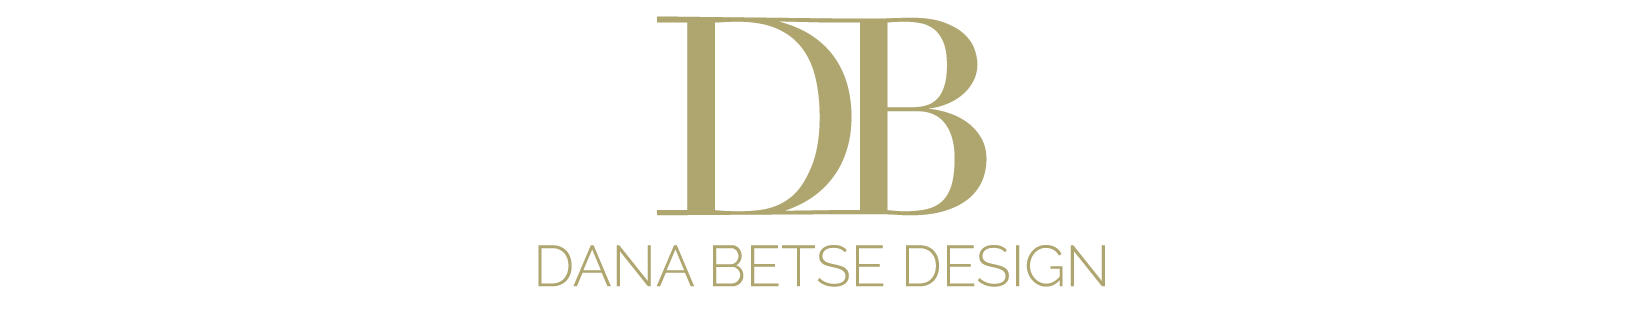 Dana Betse Design